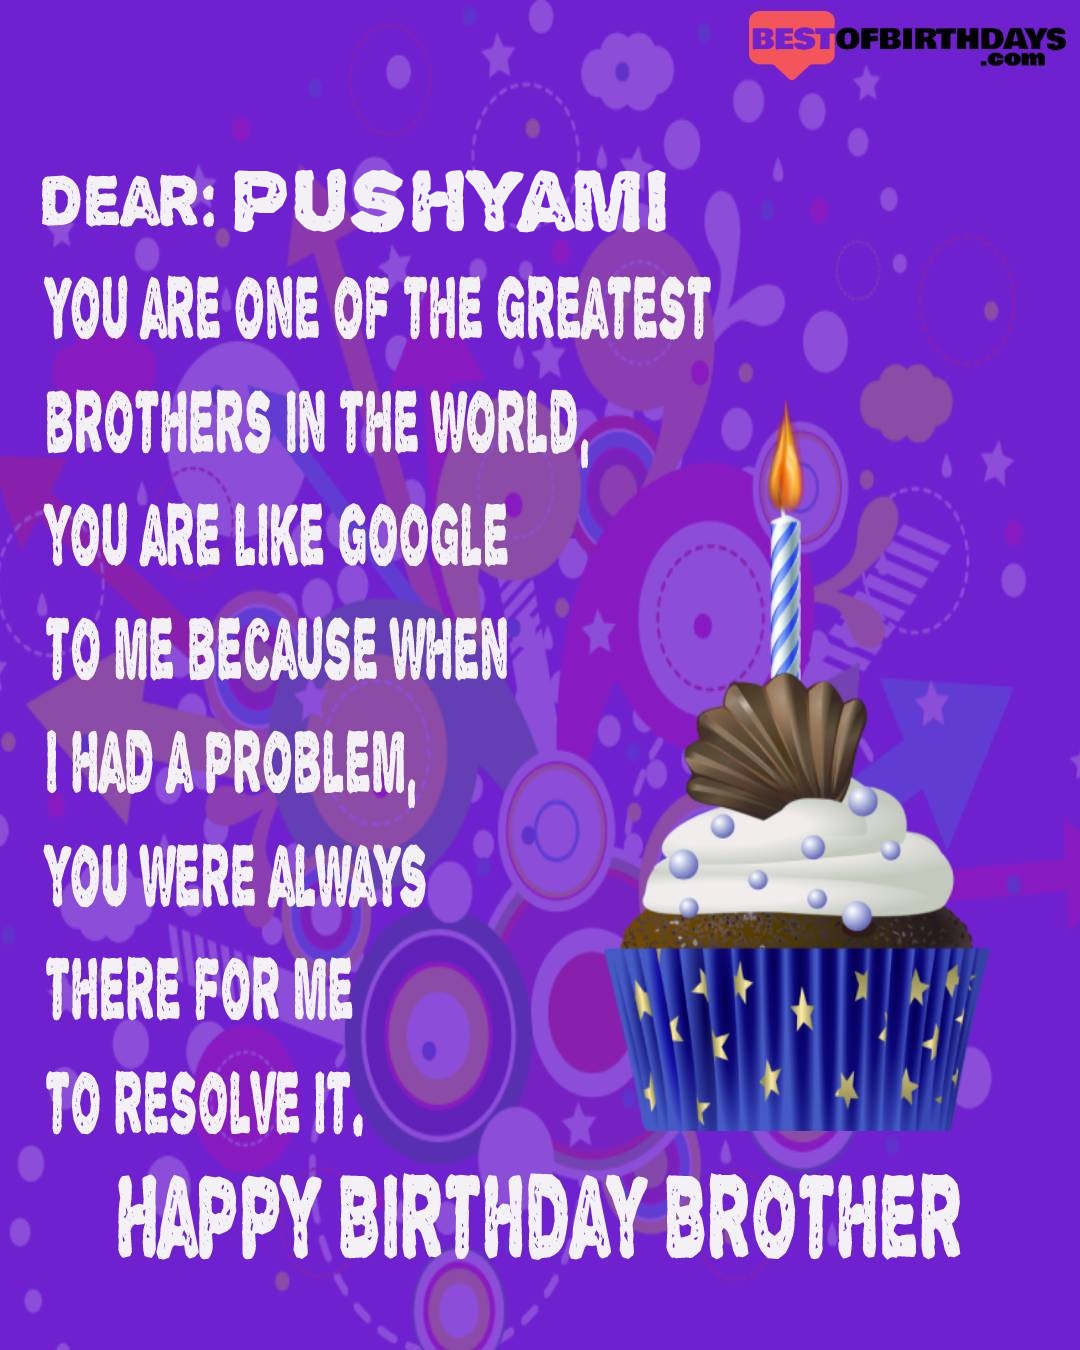 Happy birthday pushyami bhai brother bro